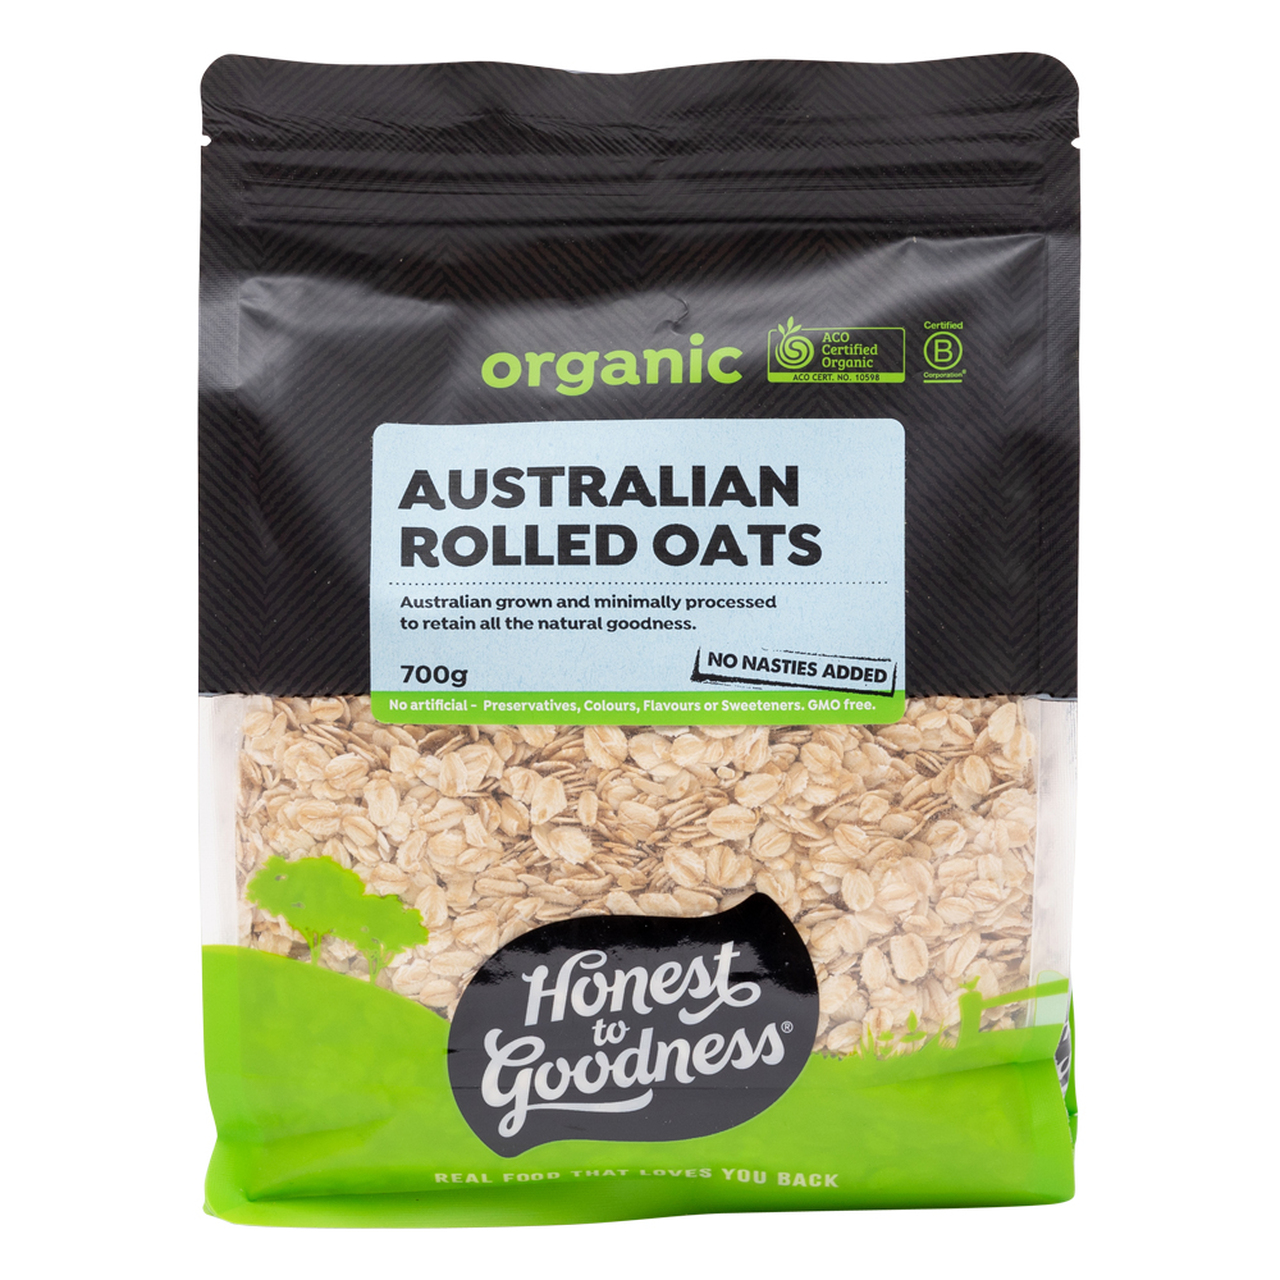 Oats Rolled Australian Goodness Organic (700g)